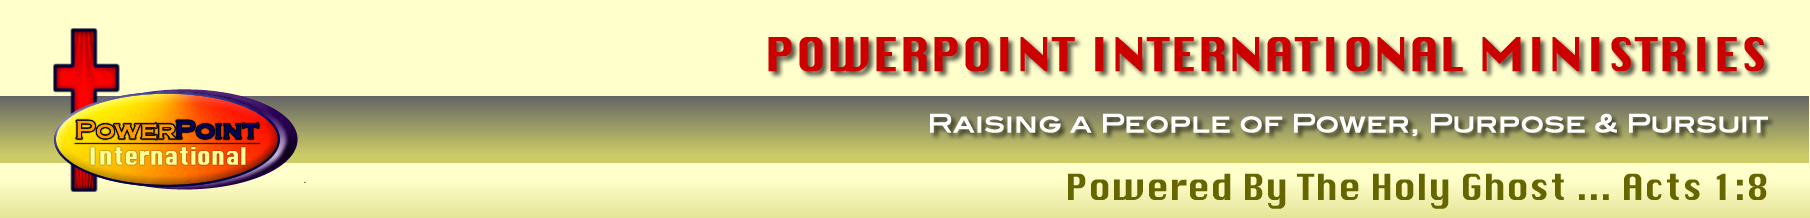 POWERPOINT INTERNATIONAL - RAISING A PEOPLE OF POWER, PURPOSE & PURSUIT